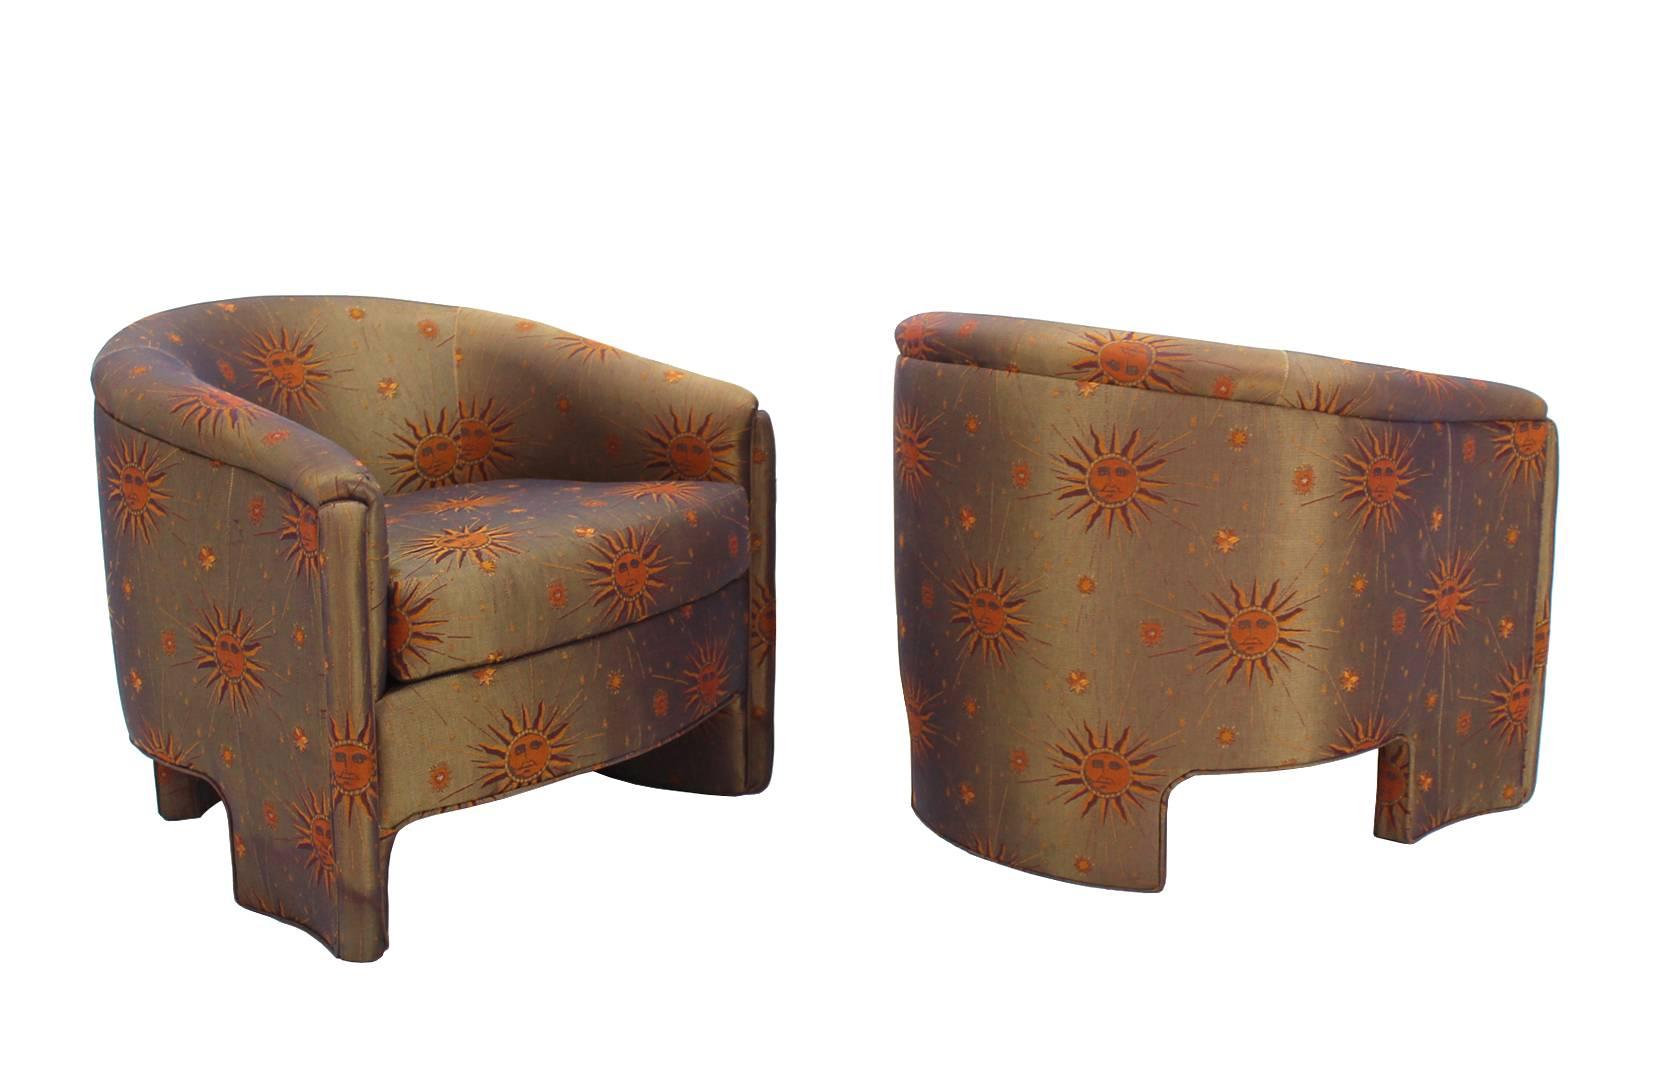 Very nice sun pattern fabric lounge chairs.